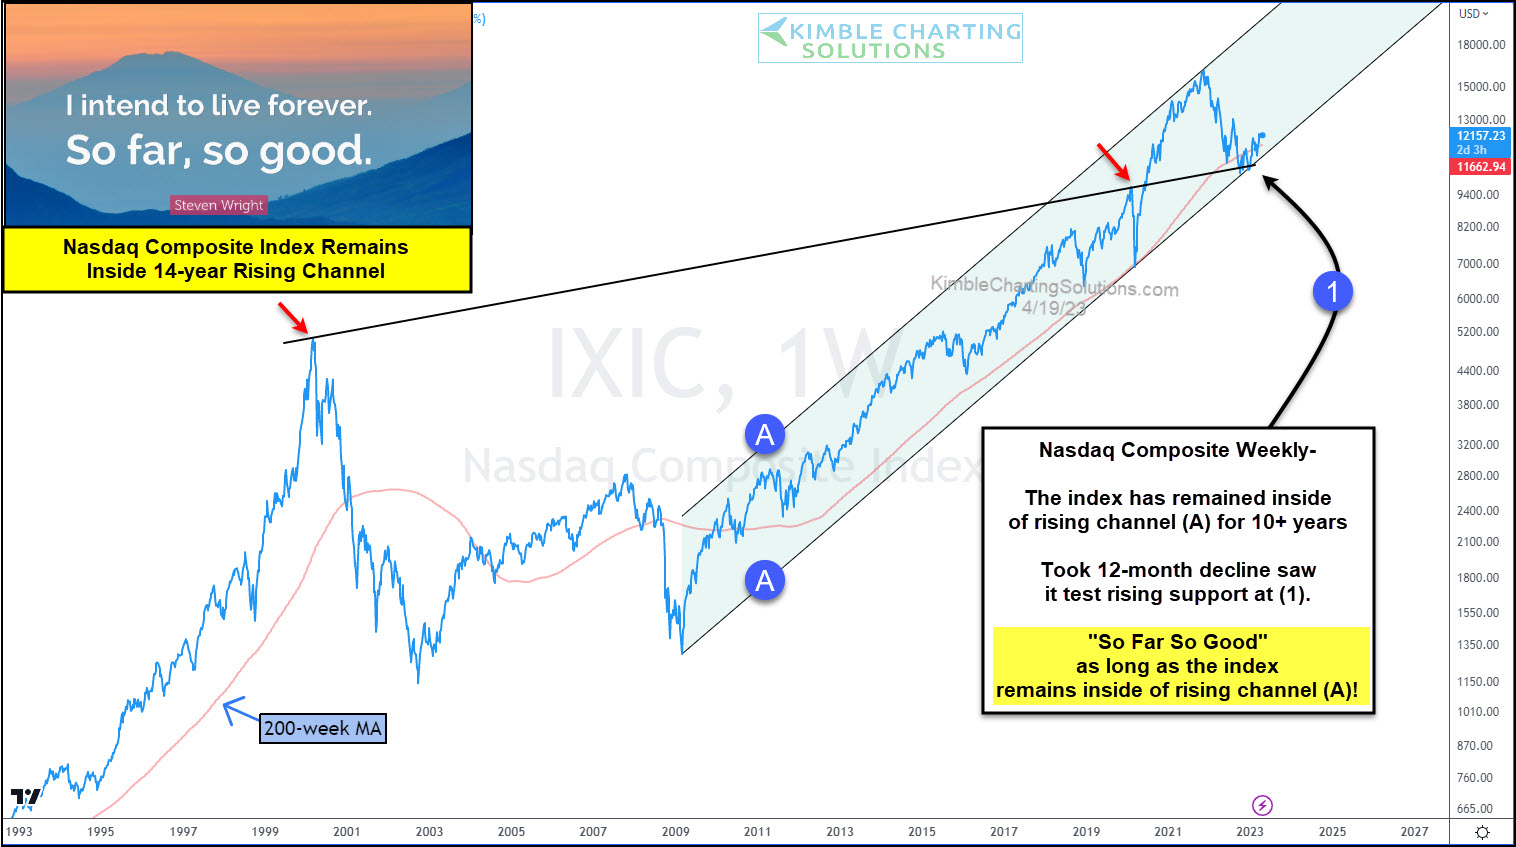 NASDAQ Composite Weekly Chart